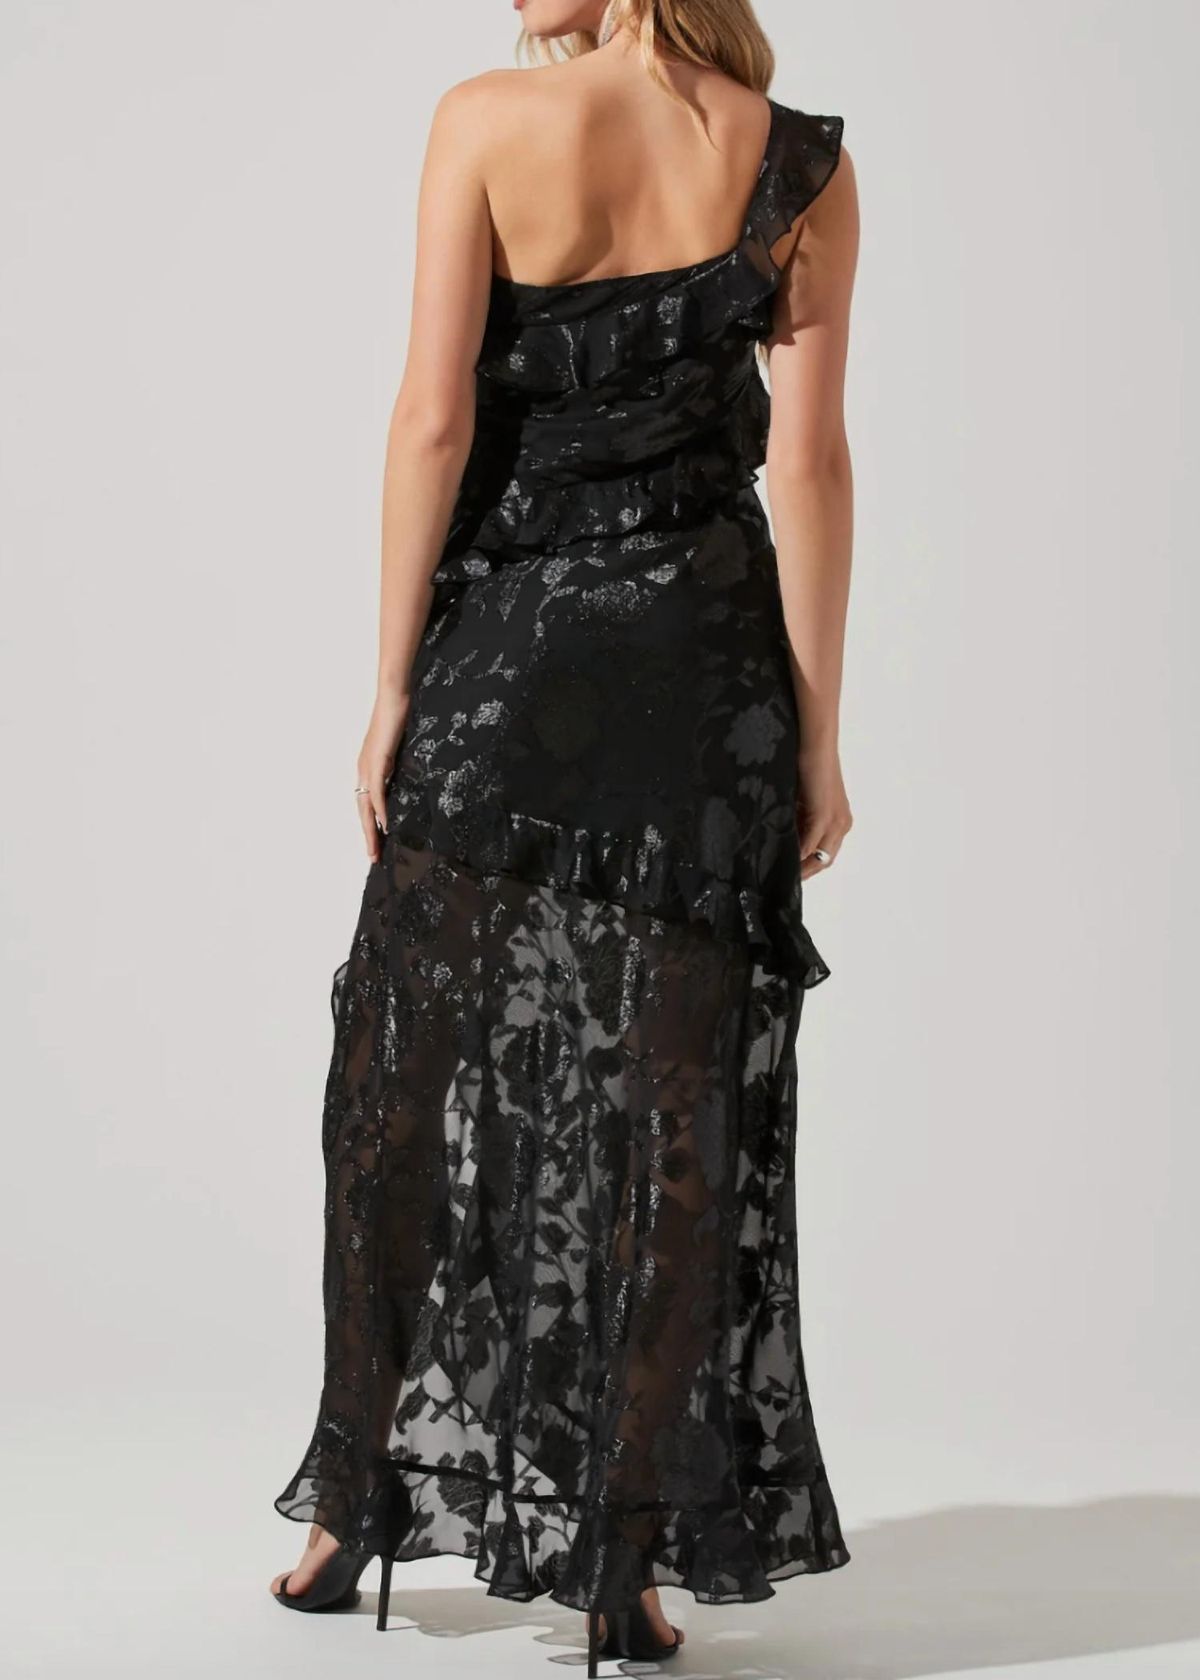 Style 1-3975519864-3855 ASTR Size XS Floral Black Side Slit Dress on Queenly